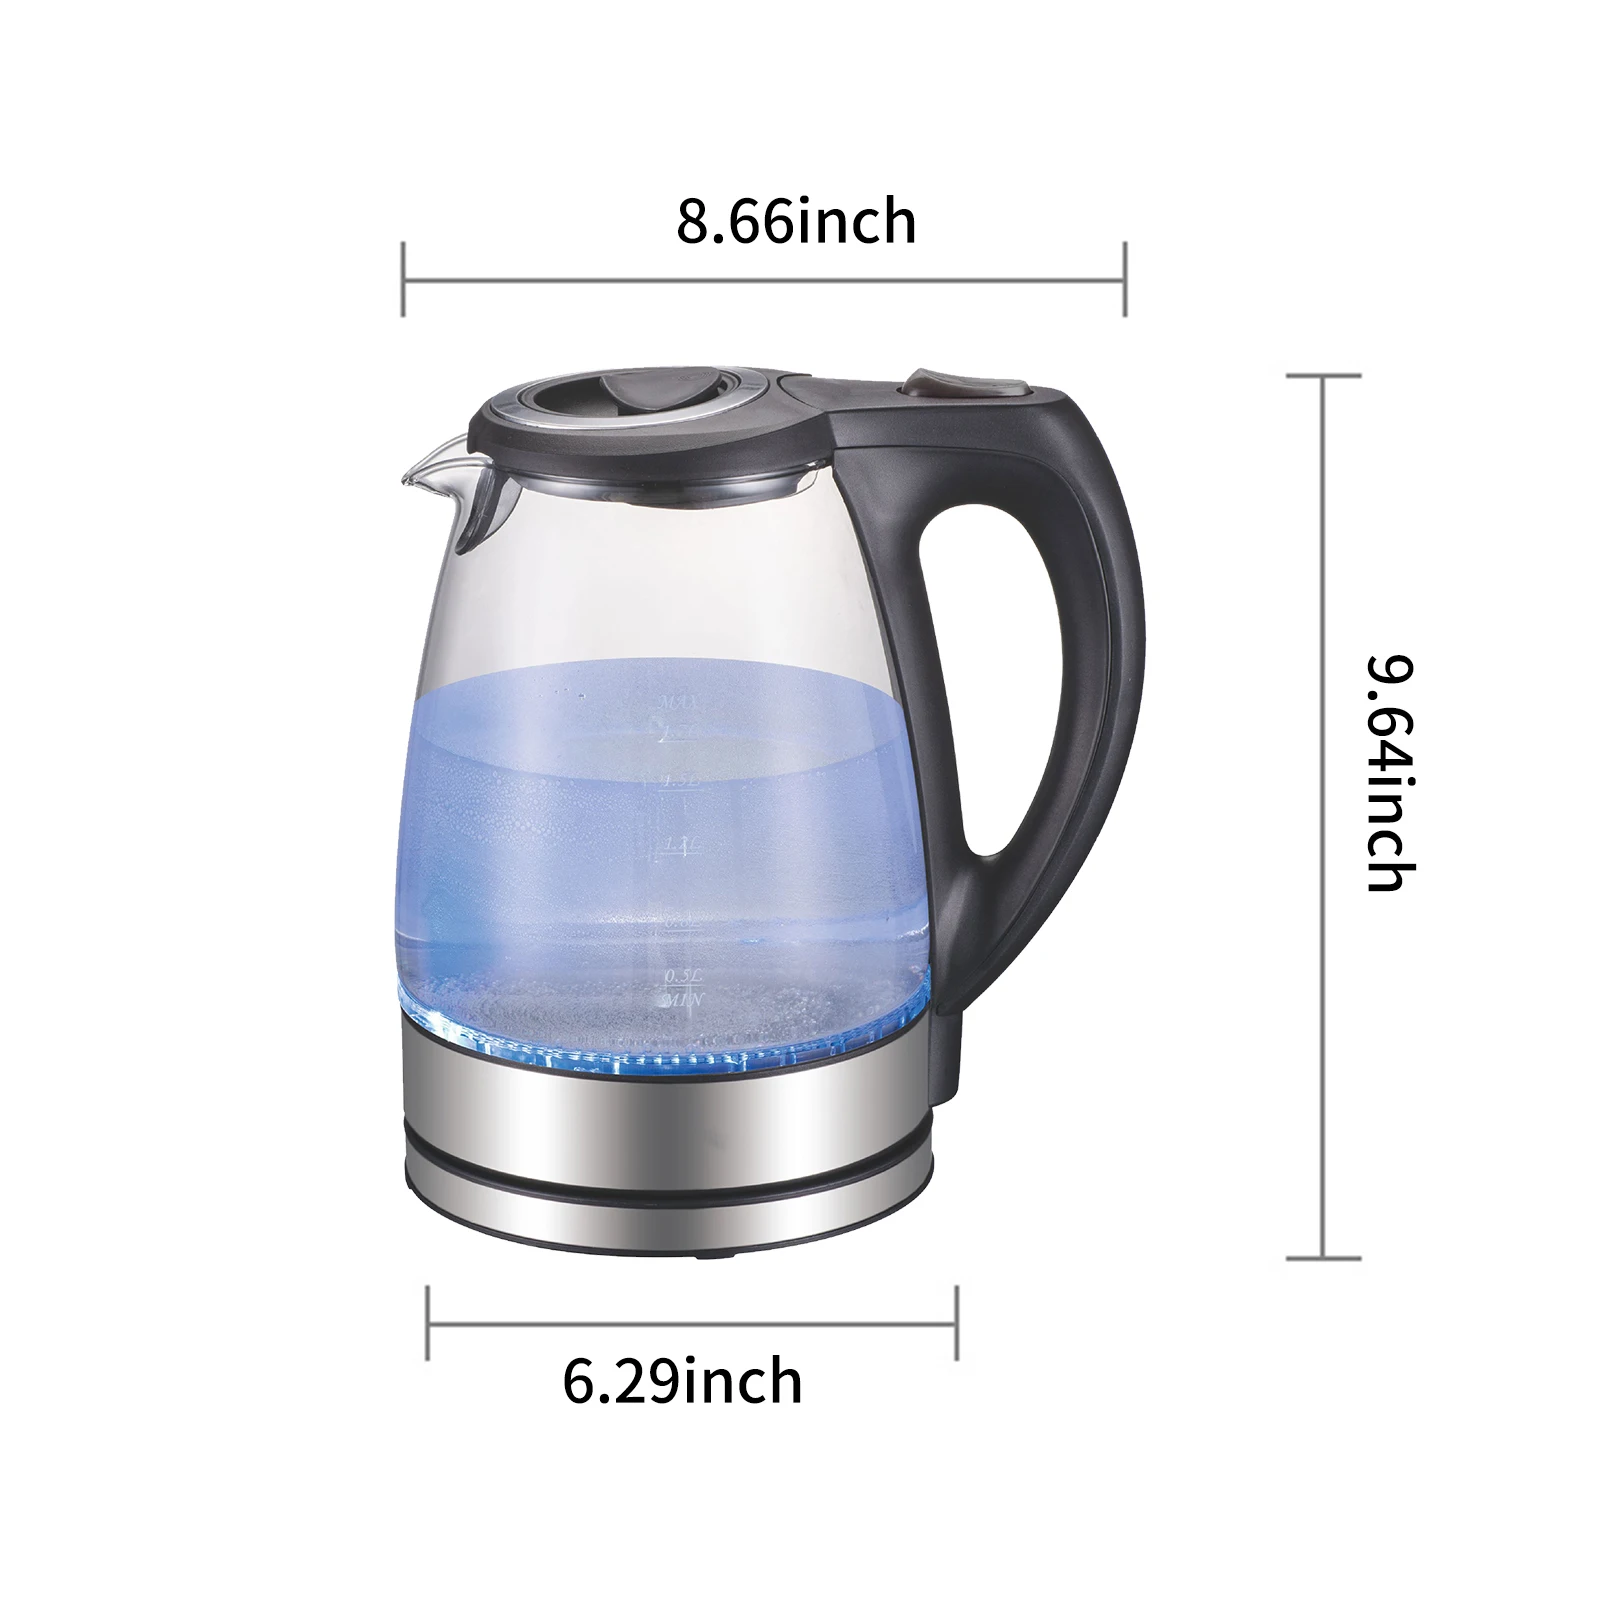 https://ae01.alicdn.com/kf/H9639281f60cc43a8aee1acb82d3e0cb0X/Electric-Kettle-1-7L-Glass-Hot-Water-Heater-for-Tea-Coffee-Auto-Shut-Off-Kitchen-Appliances.jpg